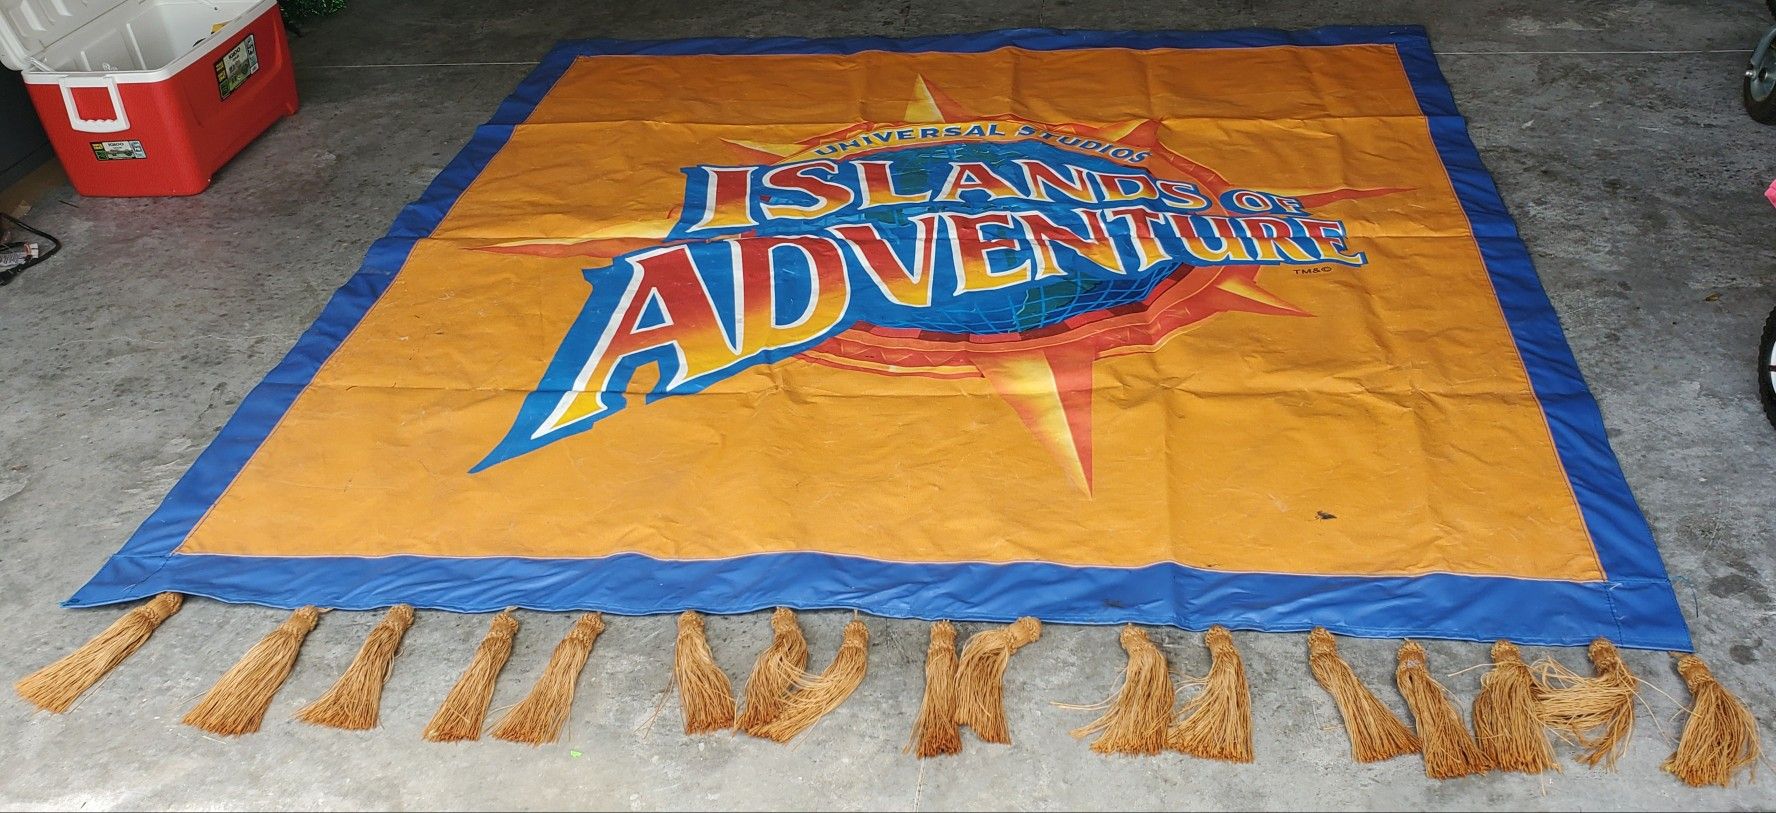 Universal Studios island of adventure banner